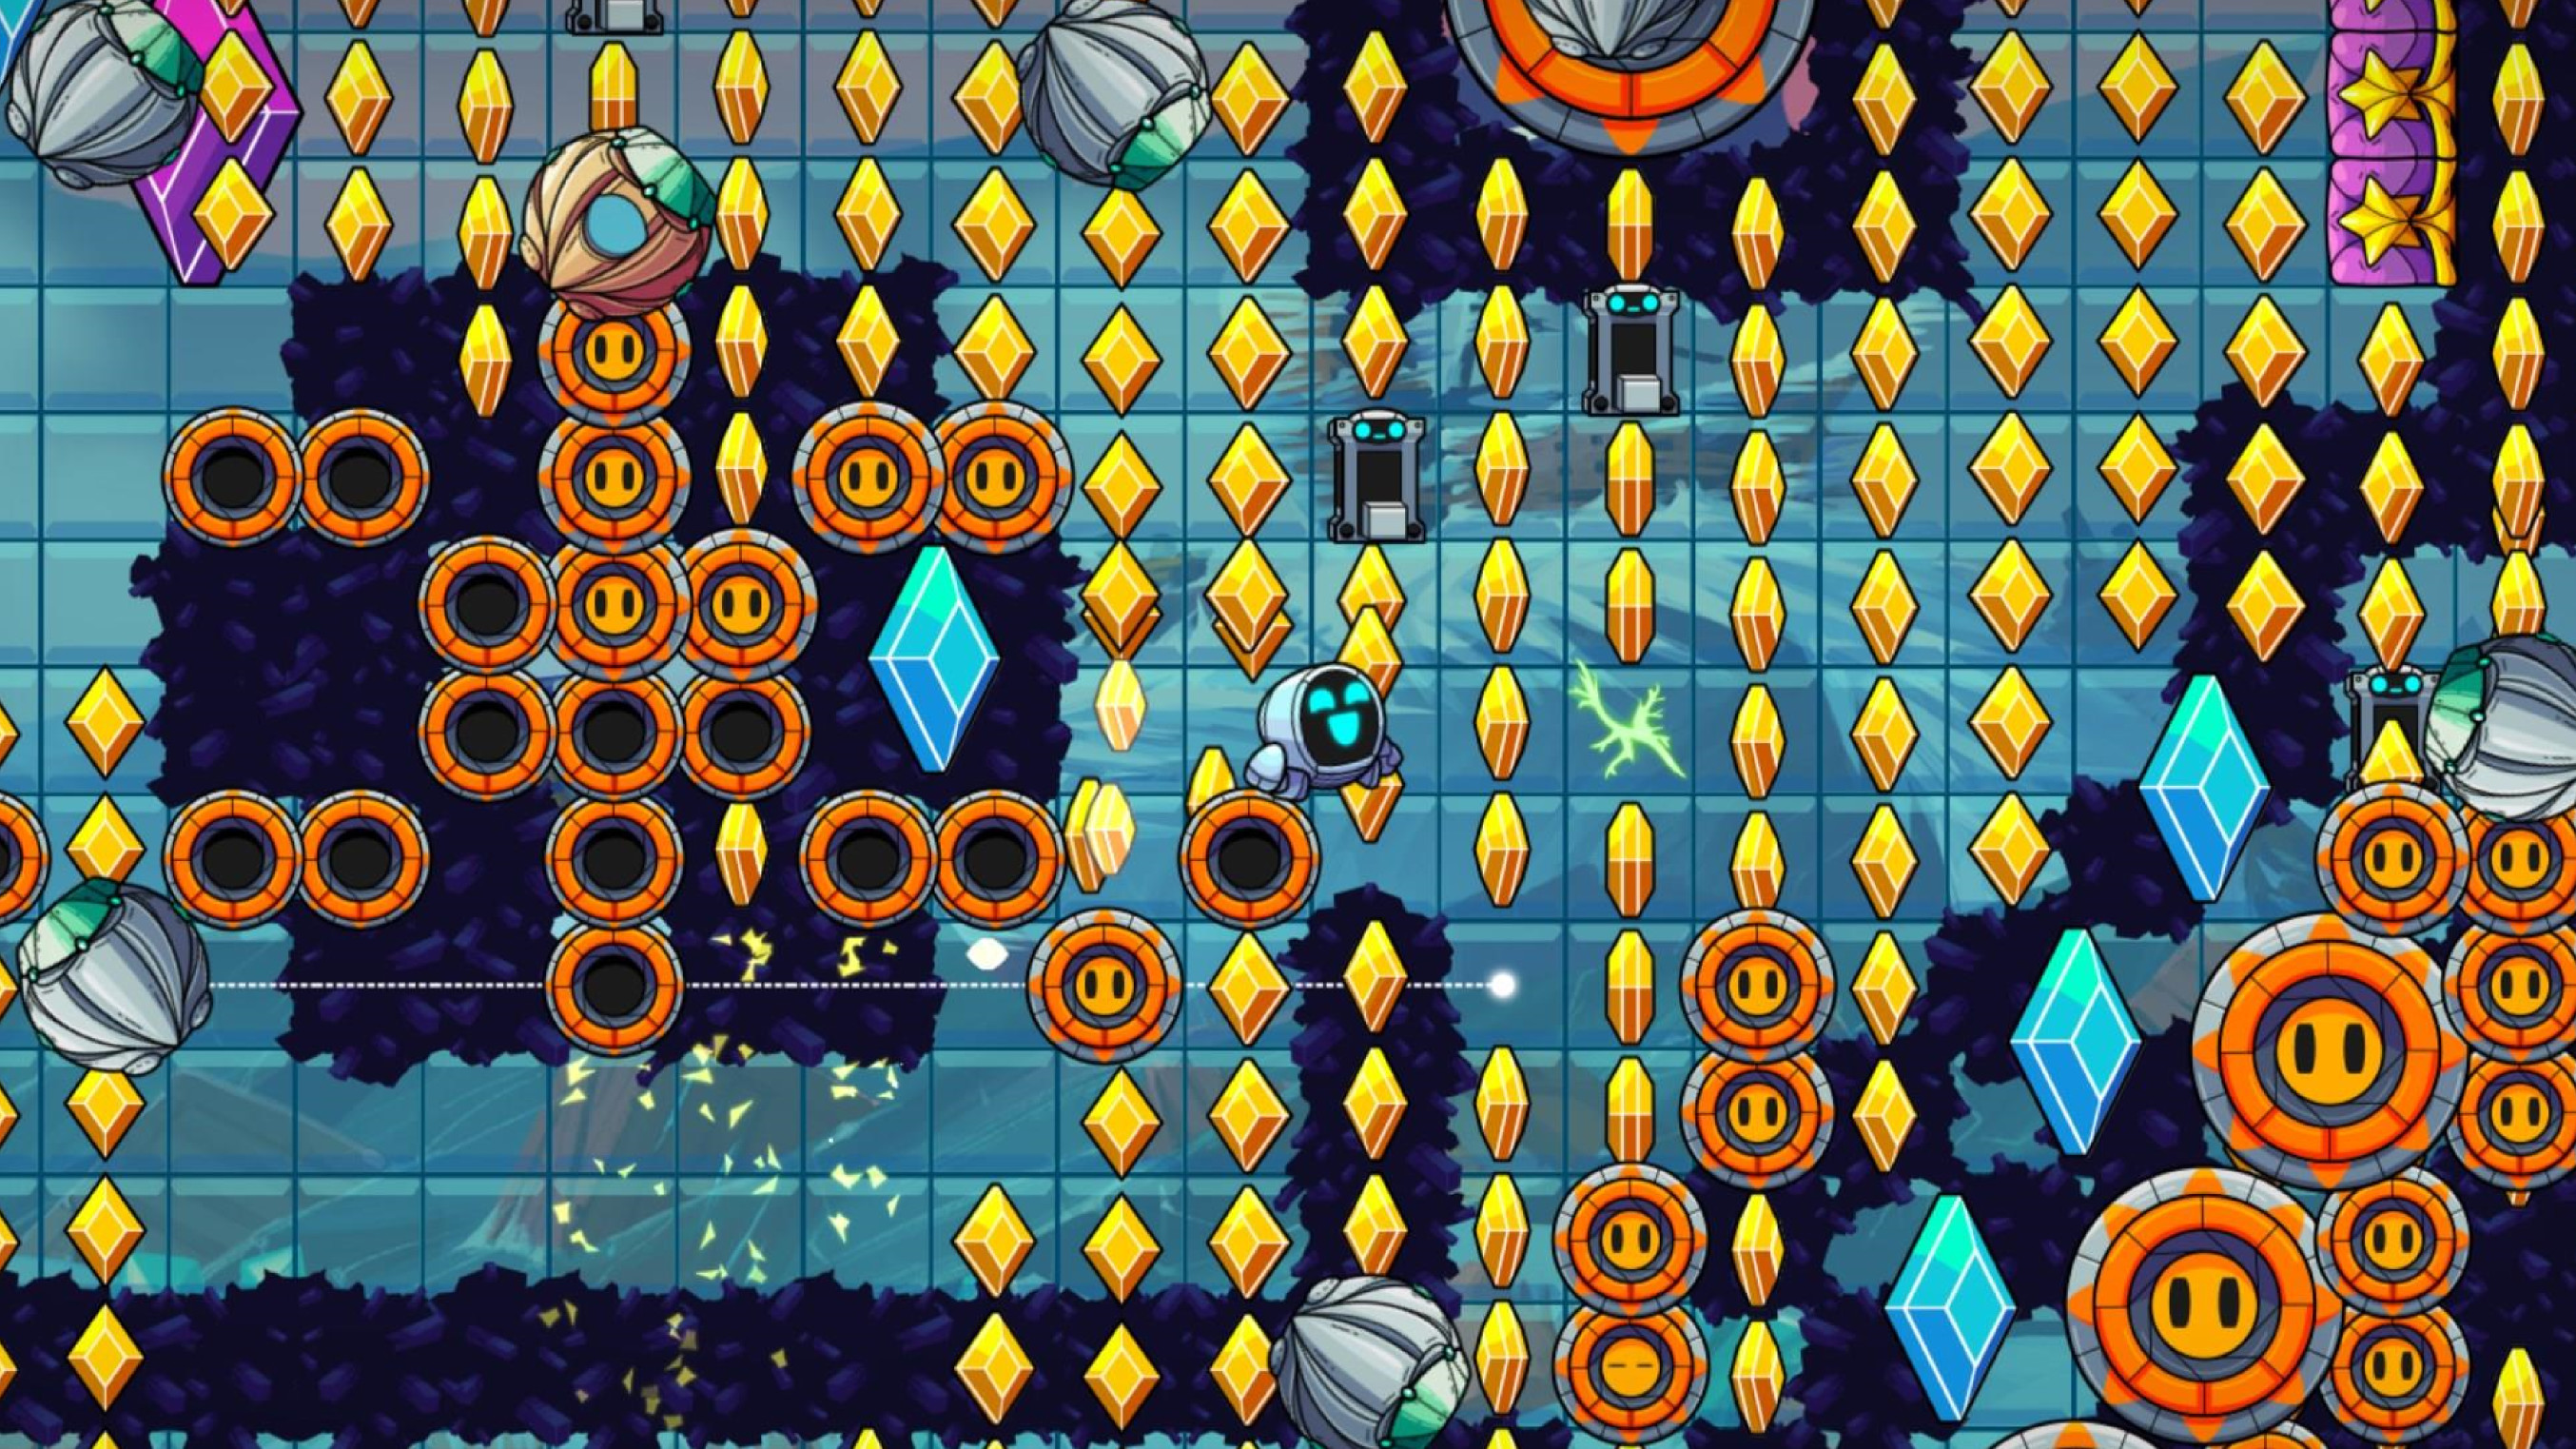 Levelhead screenshot